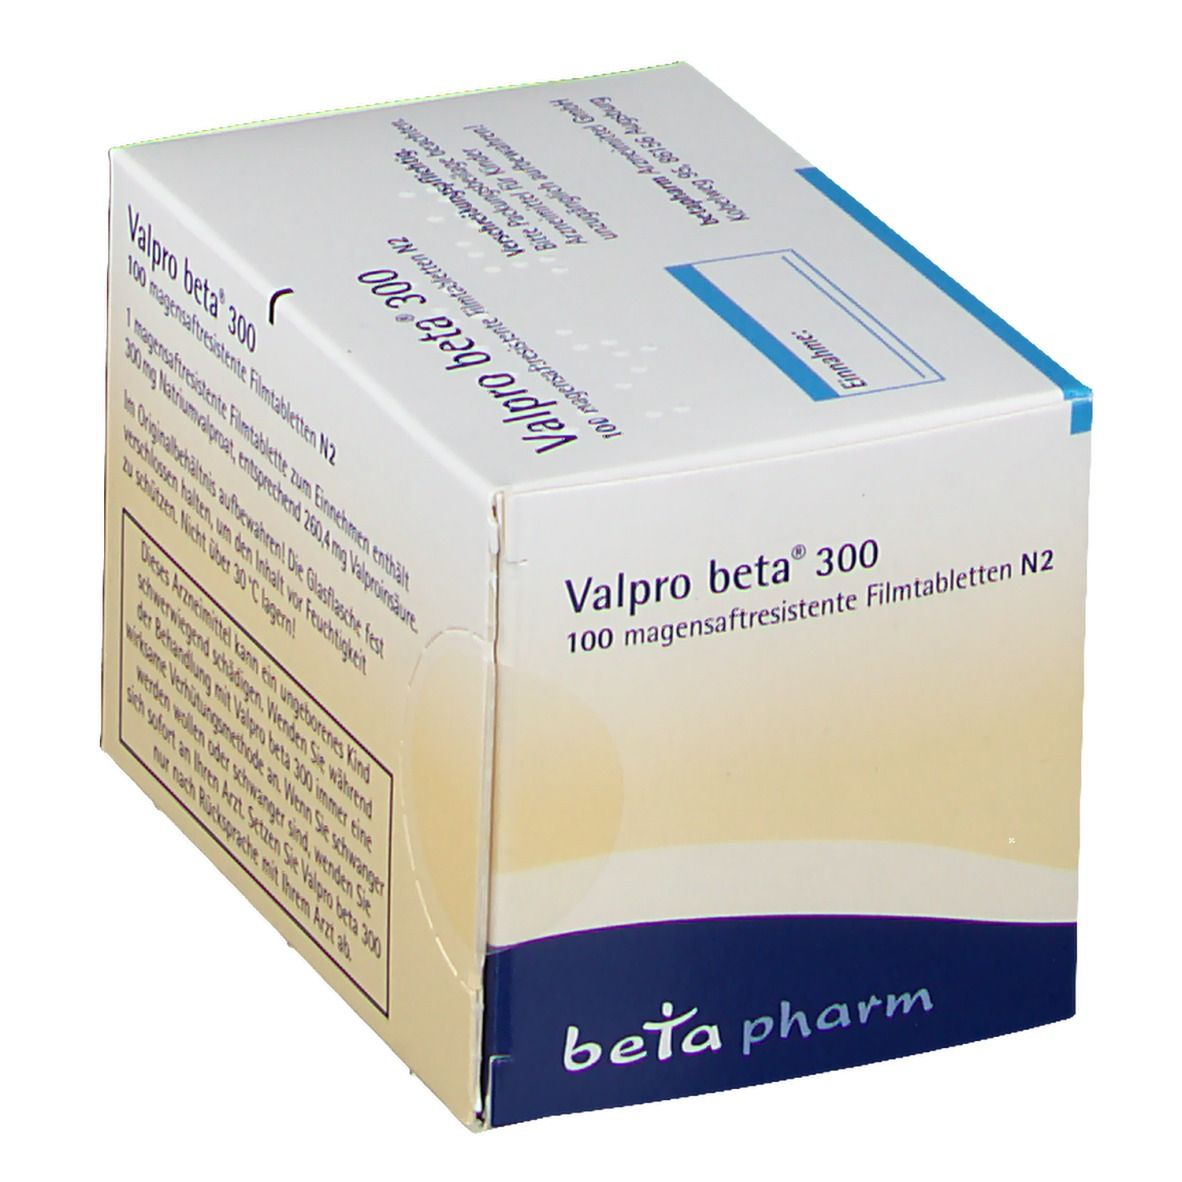 Valpro beta® 300